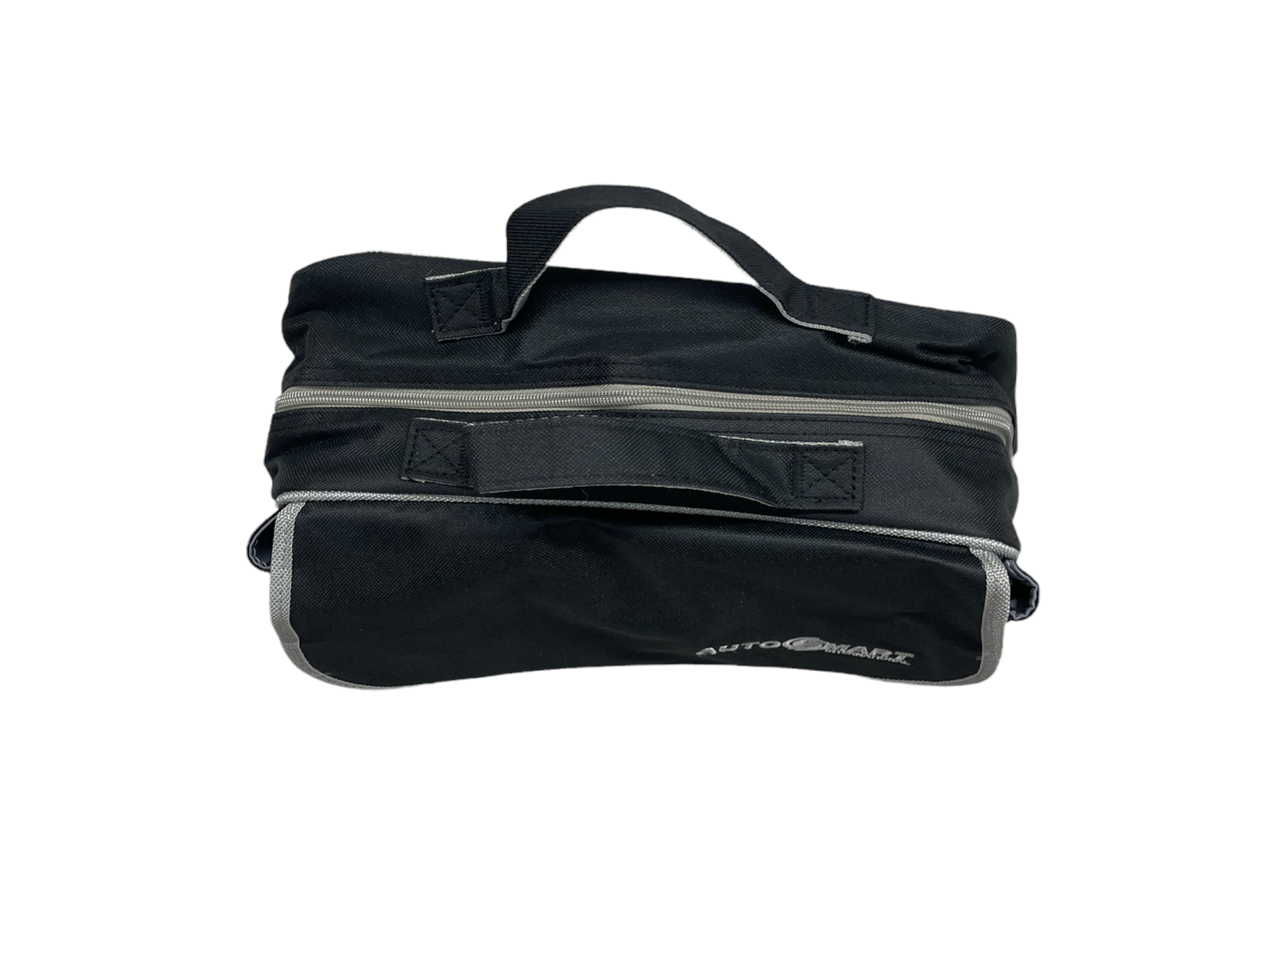 Autosmart Retail Bag - Bag only